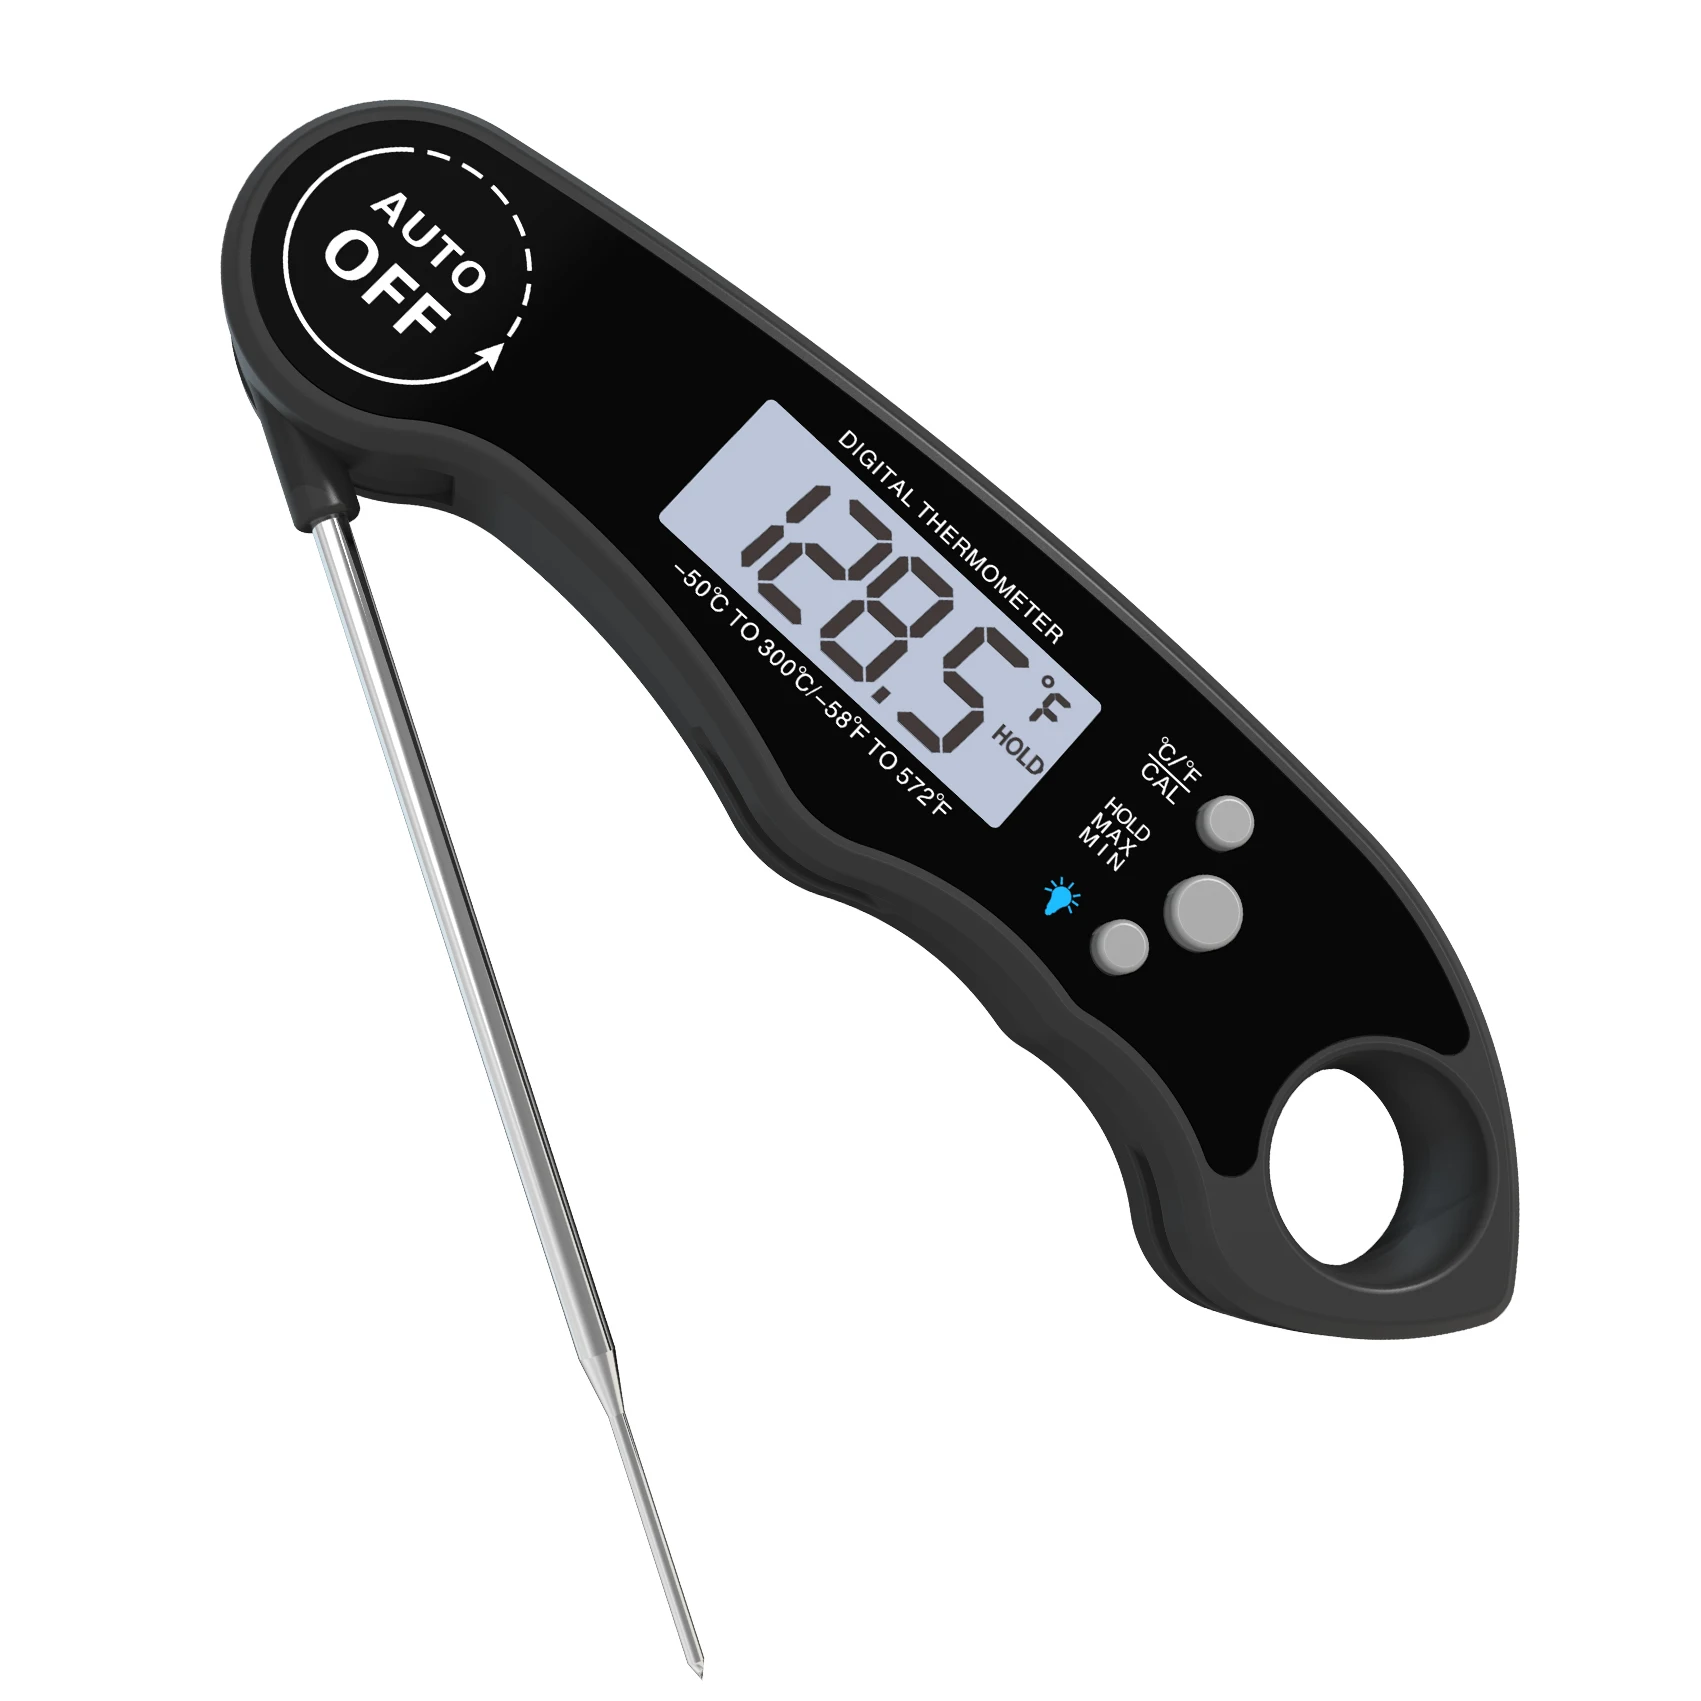 Qa Waterproof Digital Thermometer